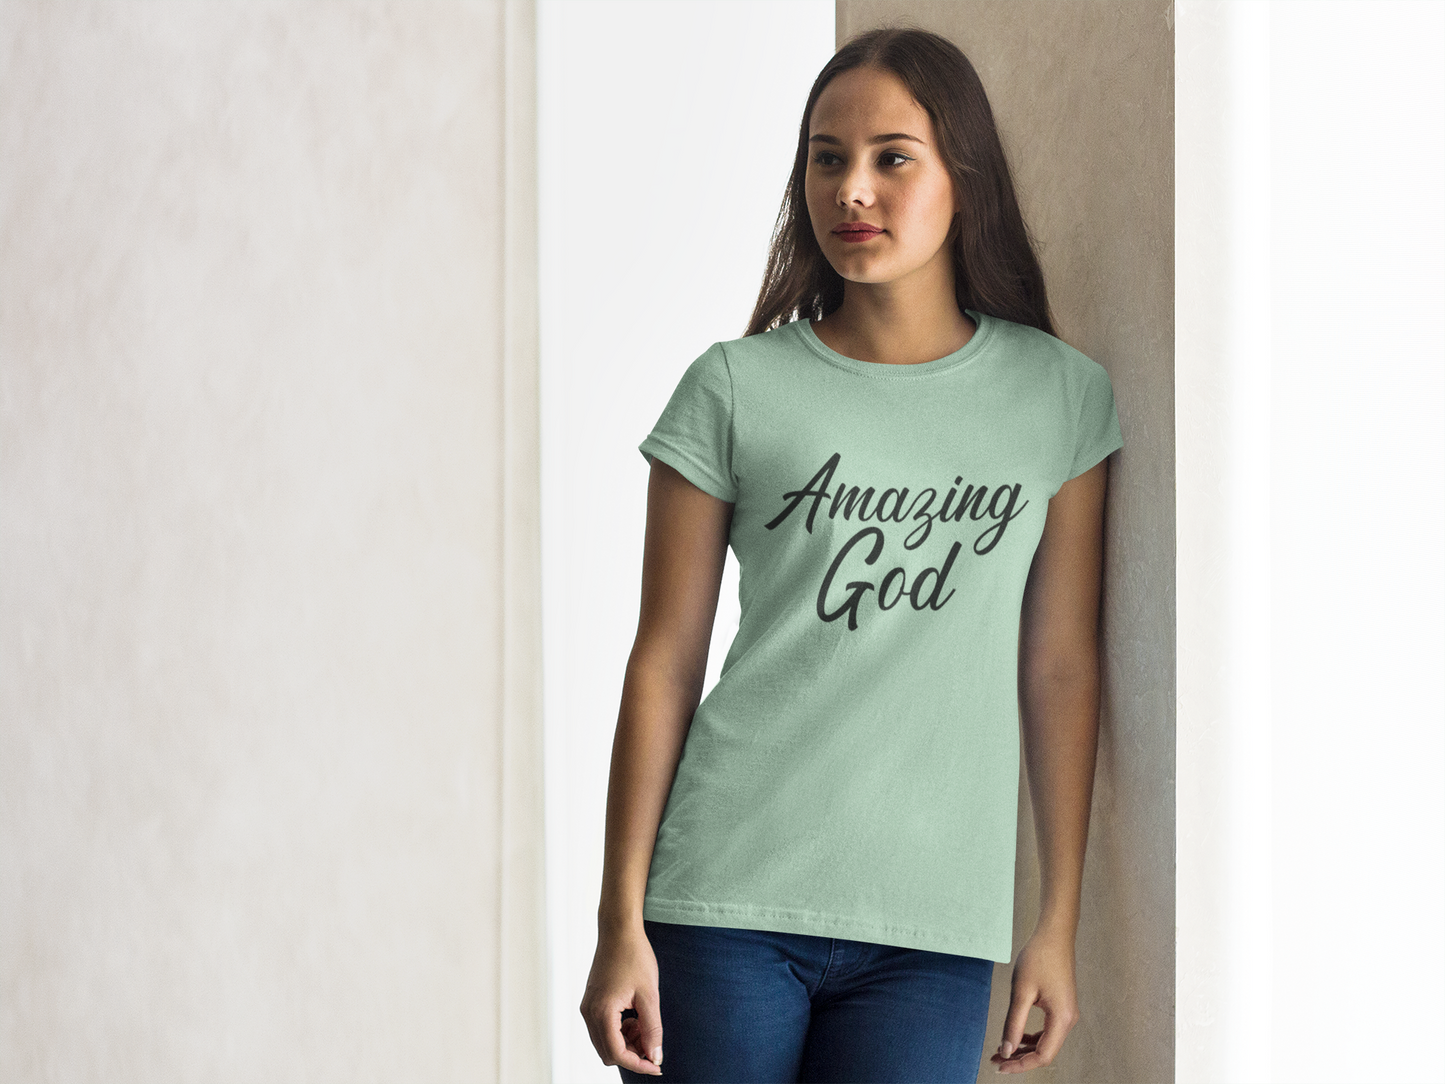 Amazing God, Unisexshirt, Motivational Shirt, Inspirational Shirt, Positive Shirts, Gift Ideas for Women, Gift Ideas for Men